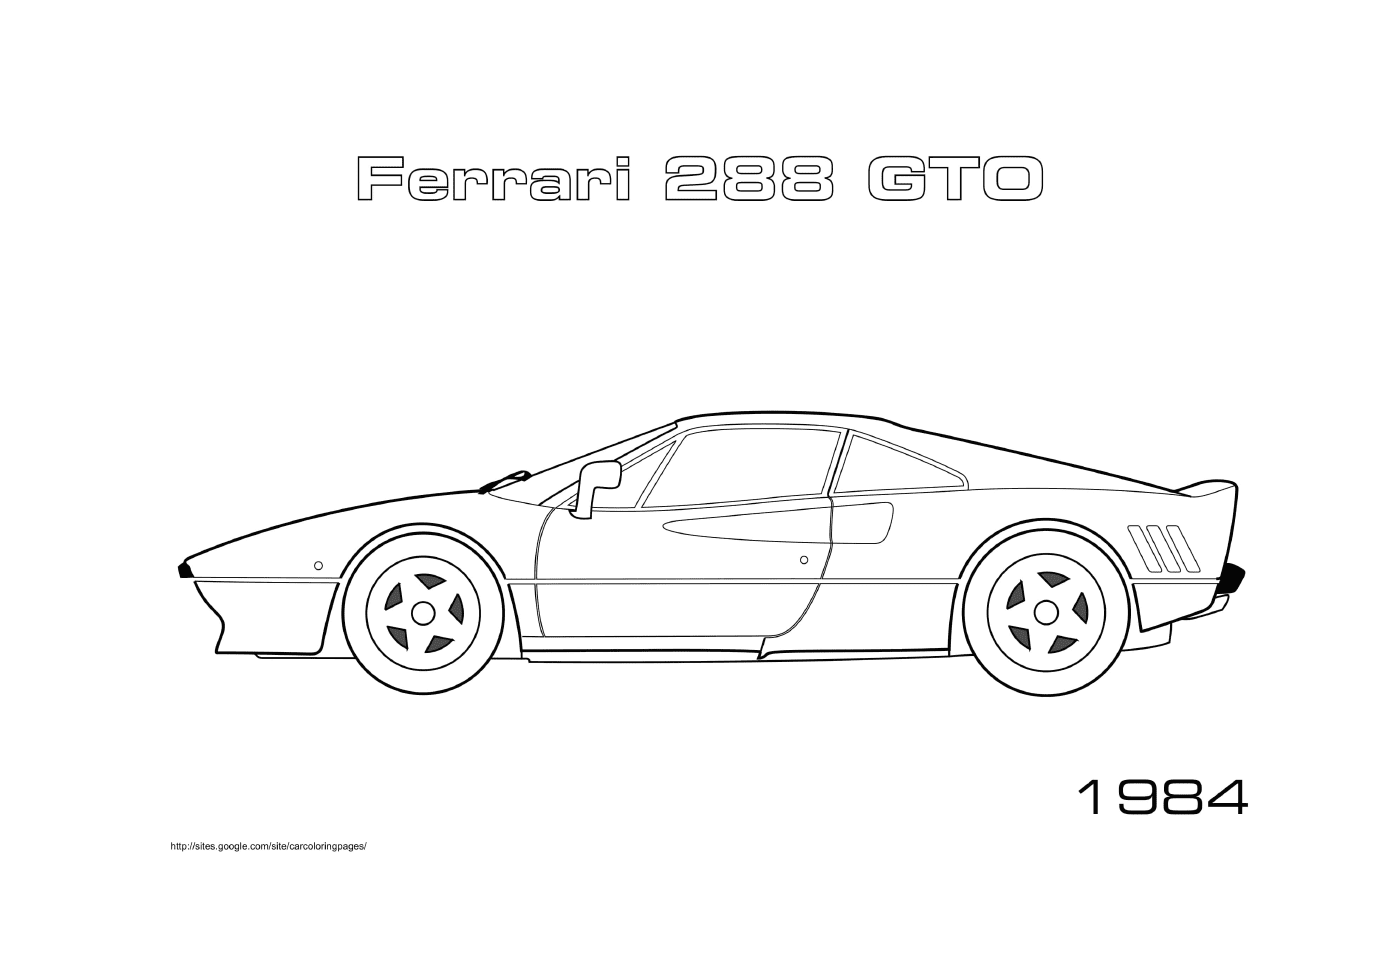  Ferrari 288 Gto 1984 